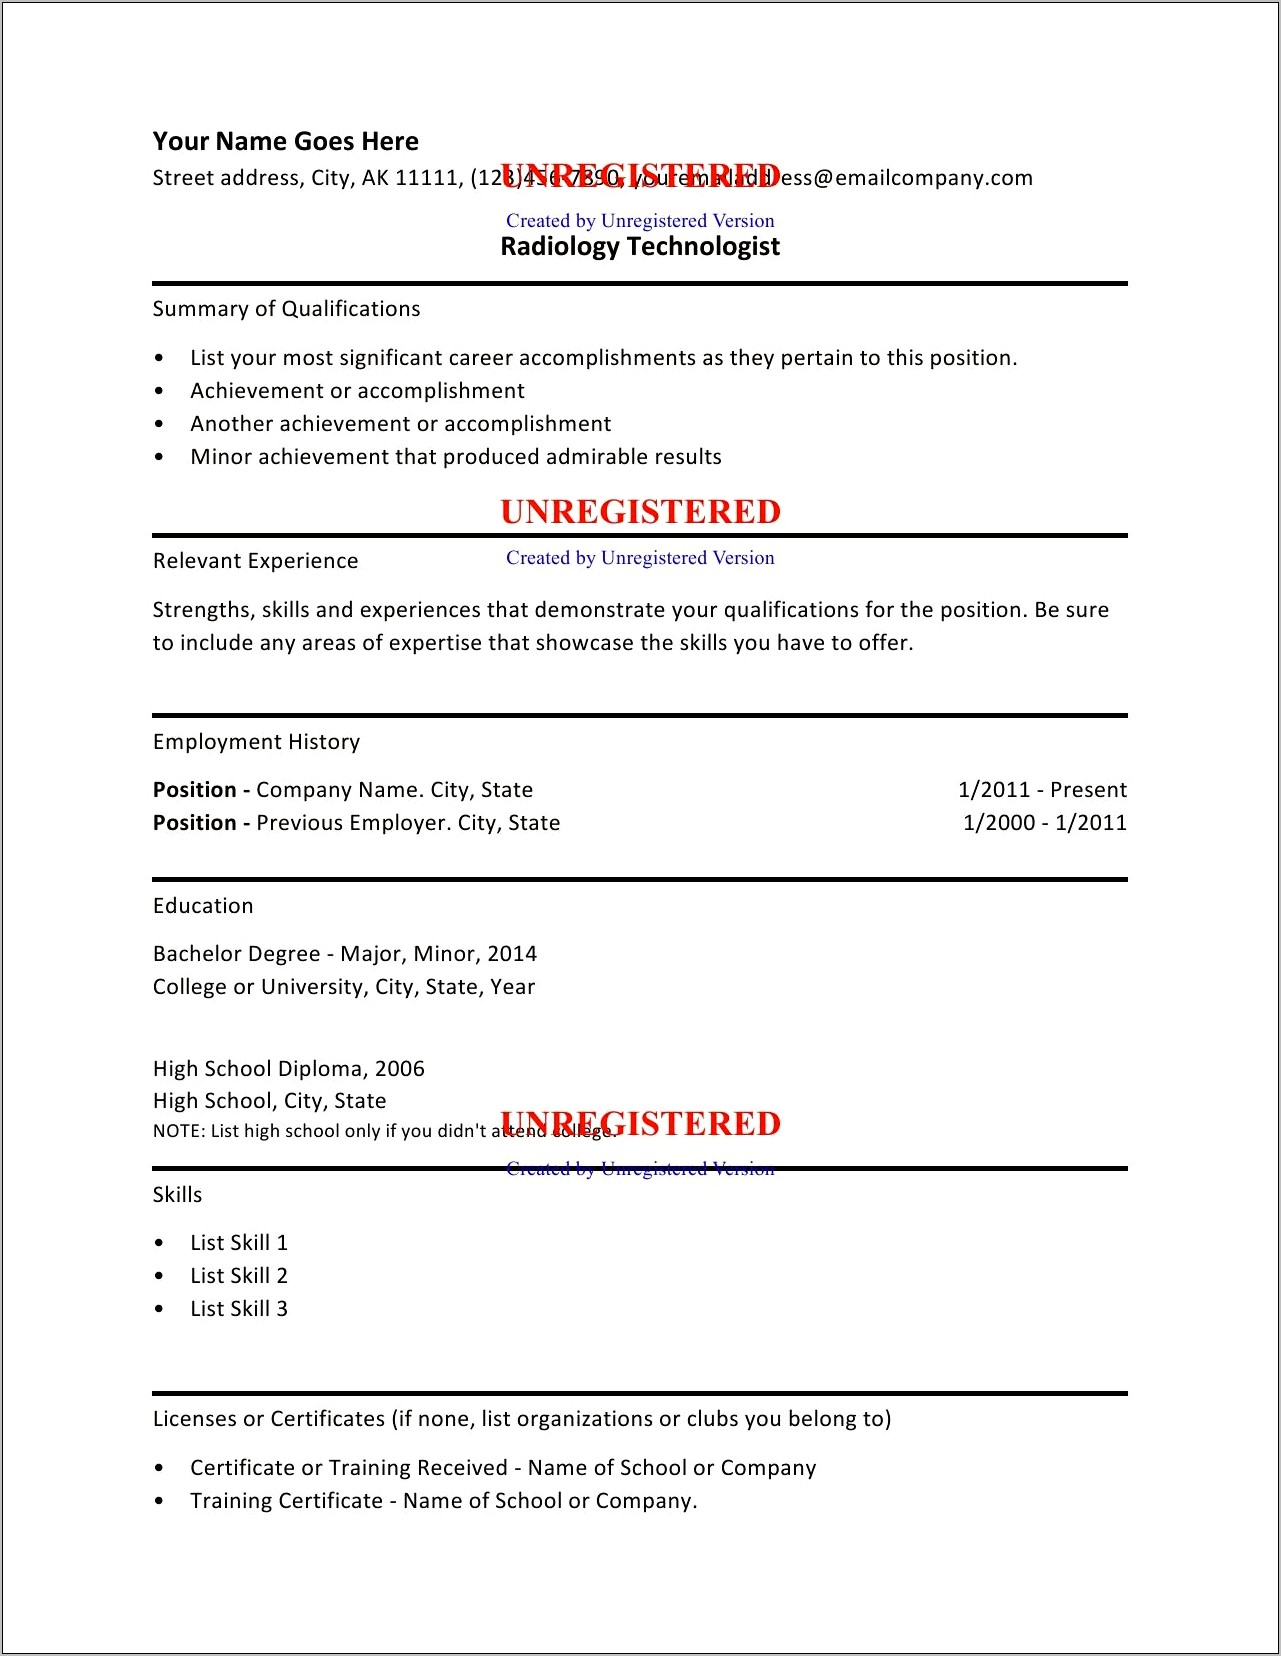 Radiology Technologist Job Description For Resume